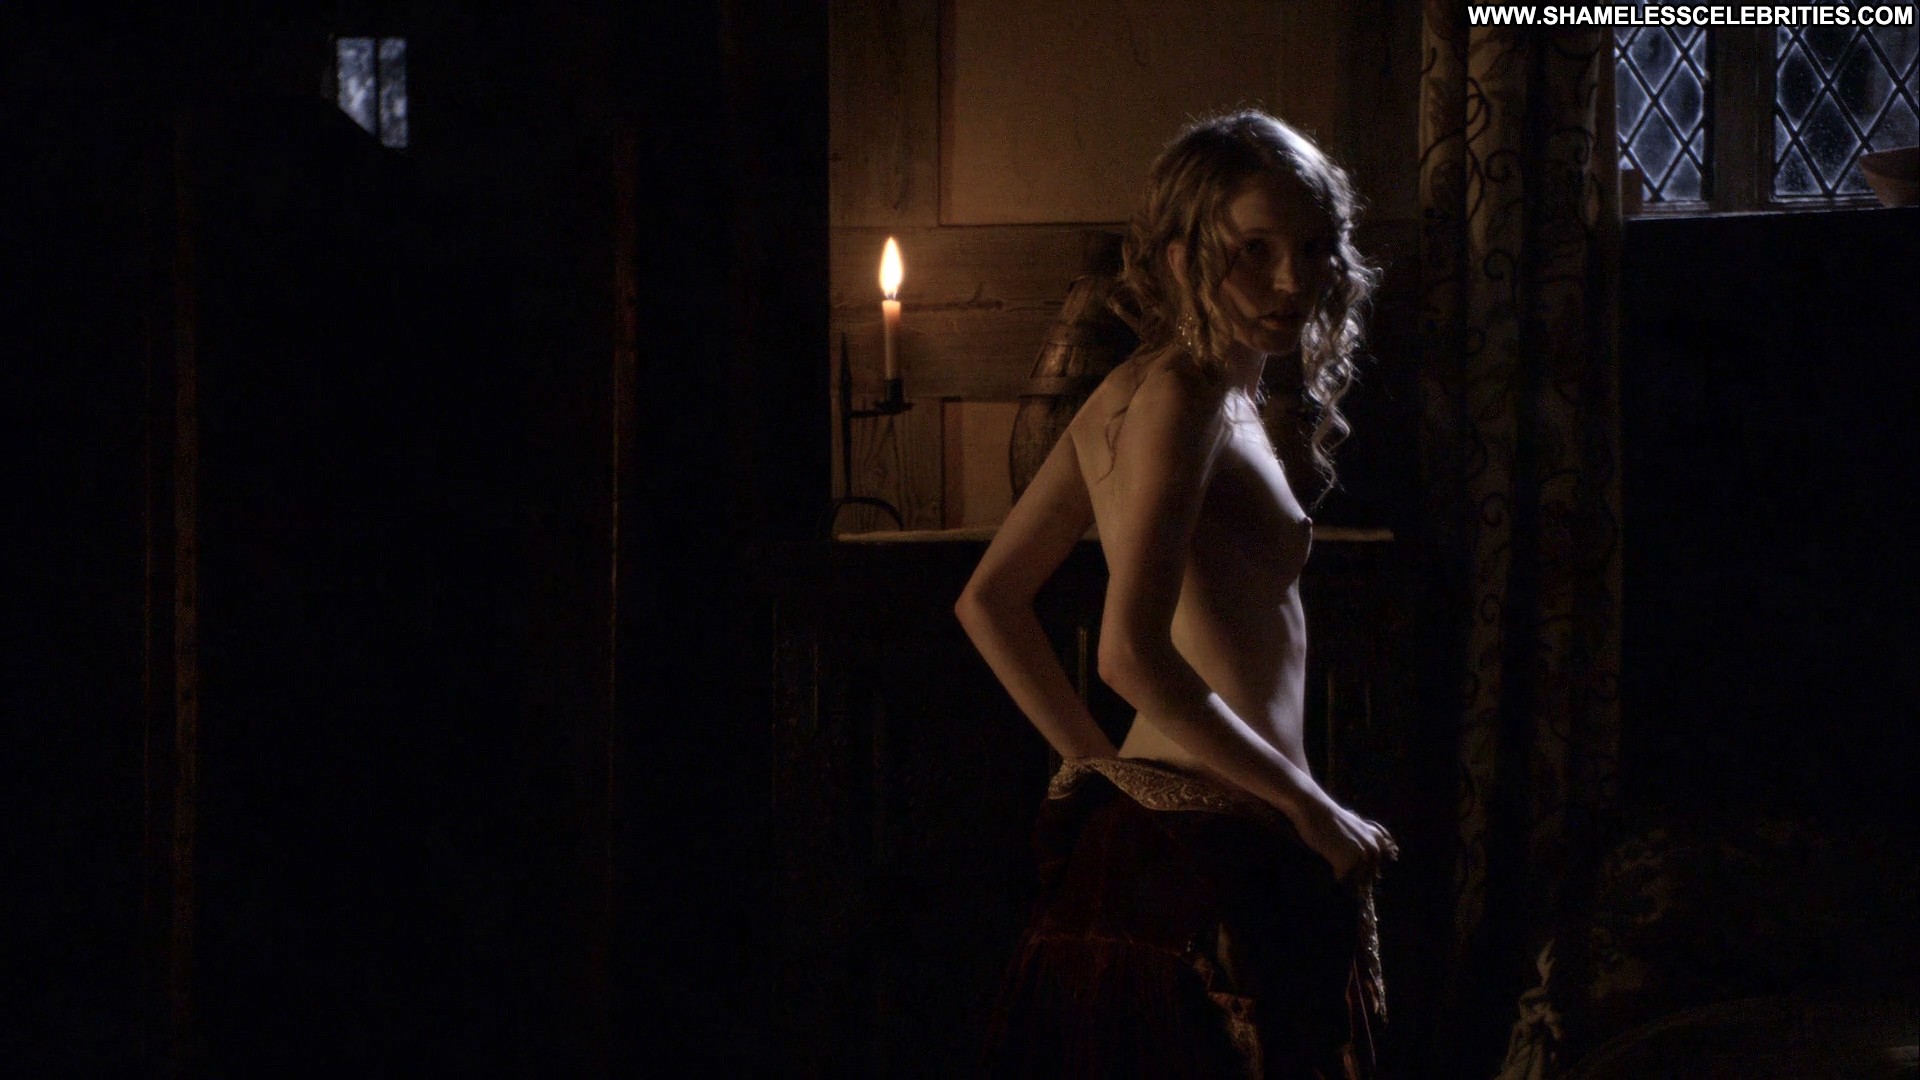 The Tudors Tamzin Merchant Topless Nude Cute Posing Hot Celebrity